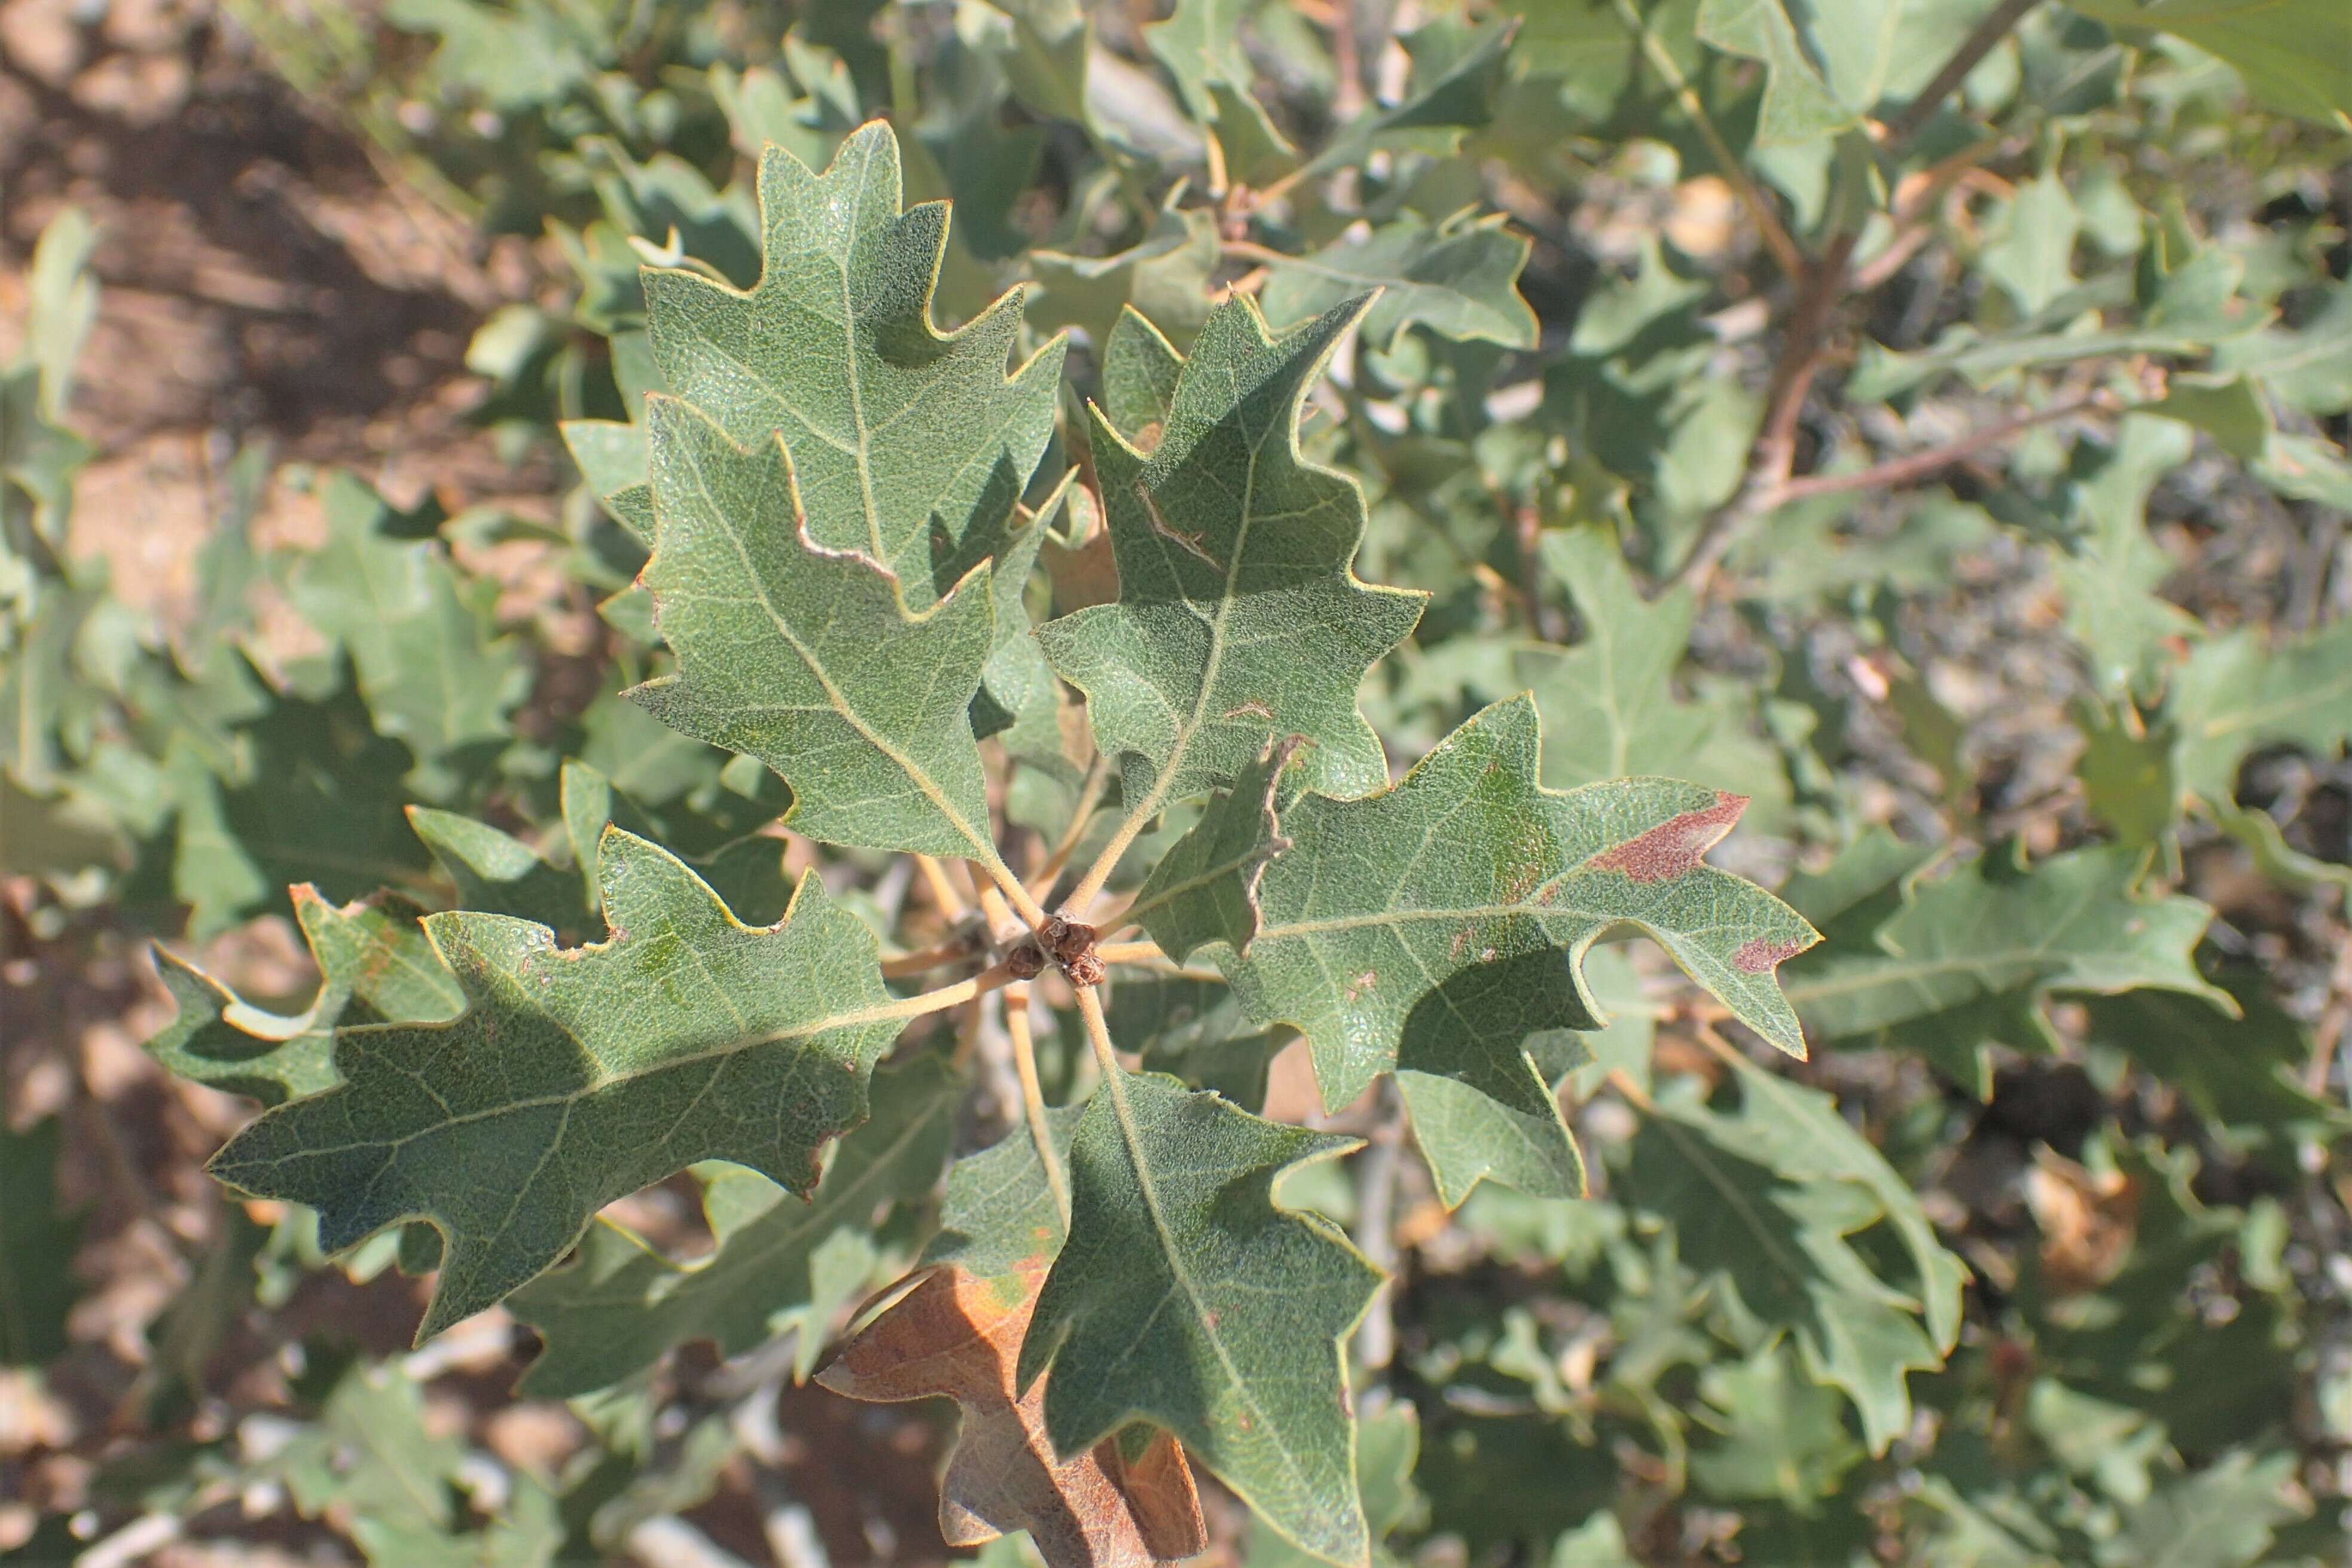 Image of Havard oak